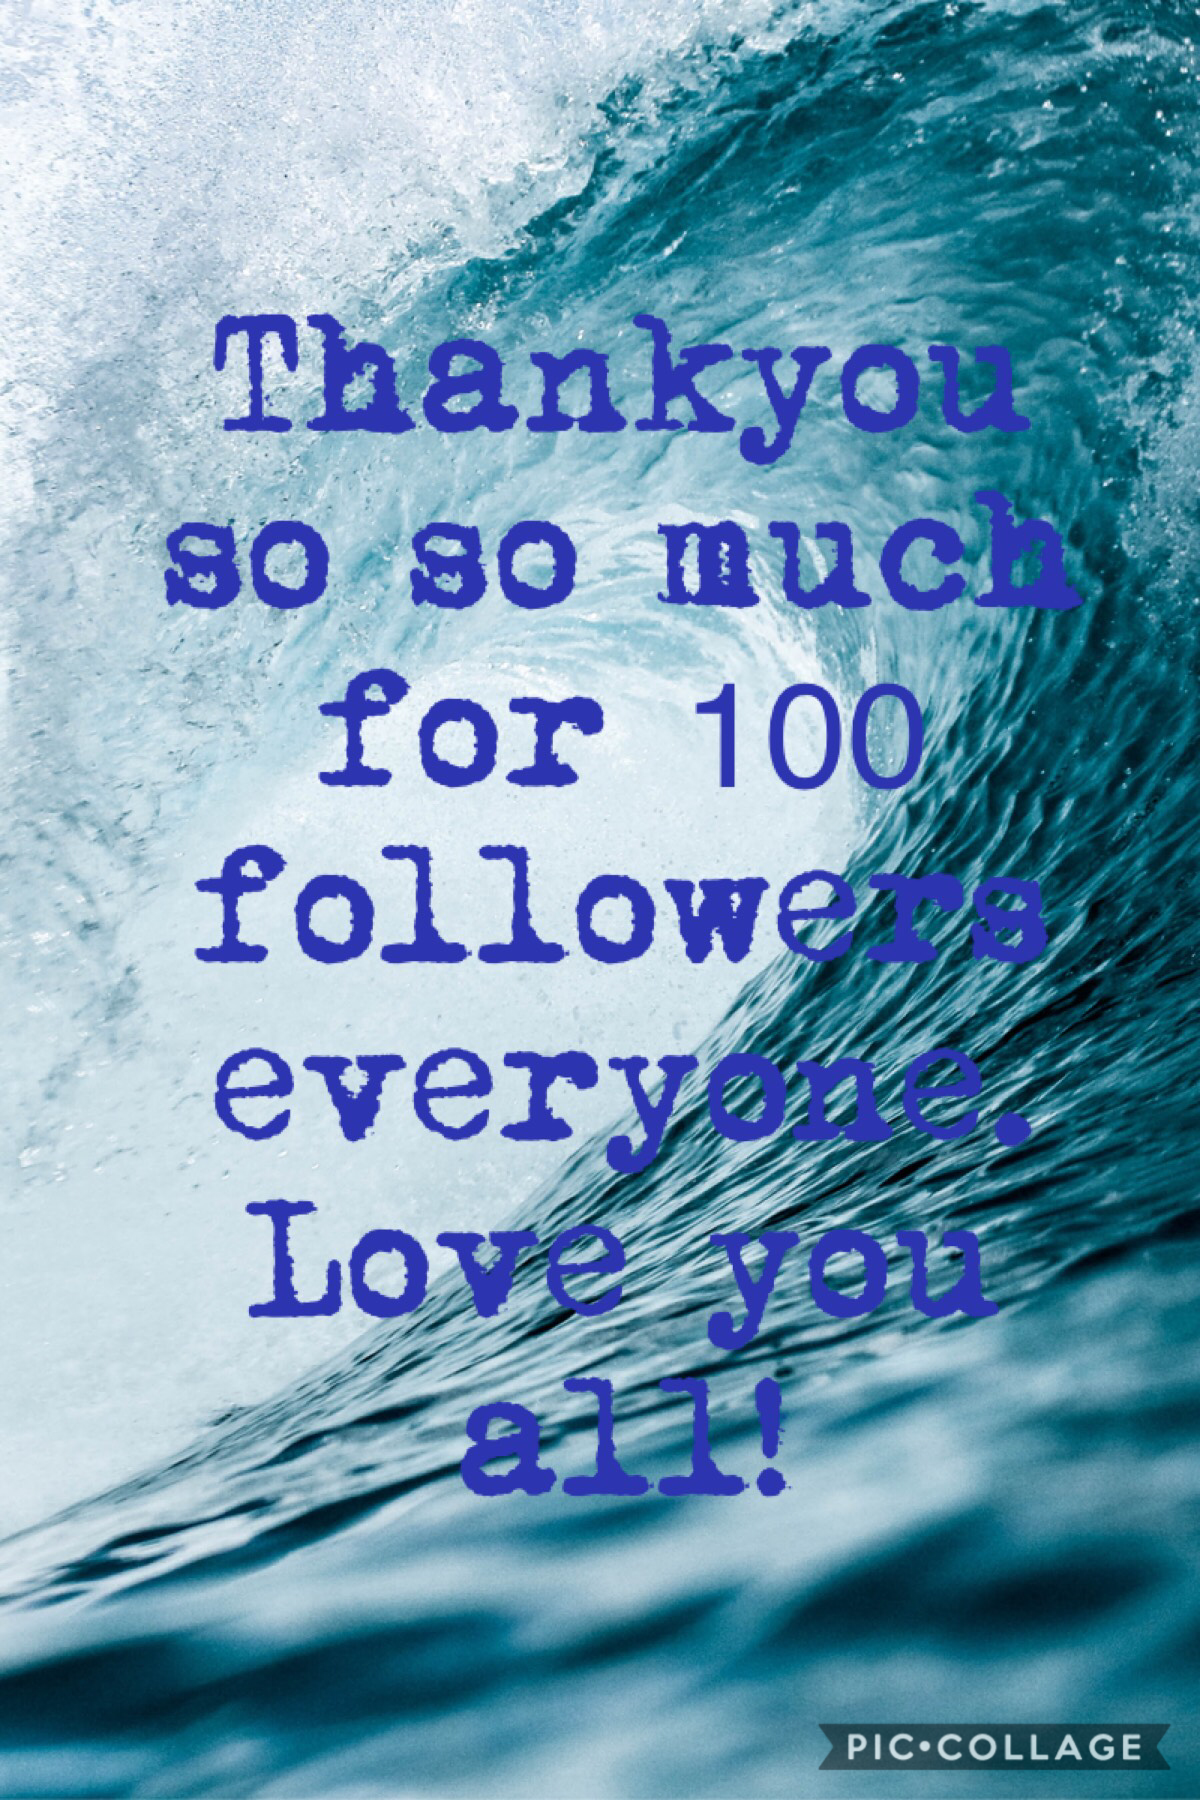 Thankyou everyone